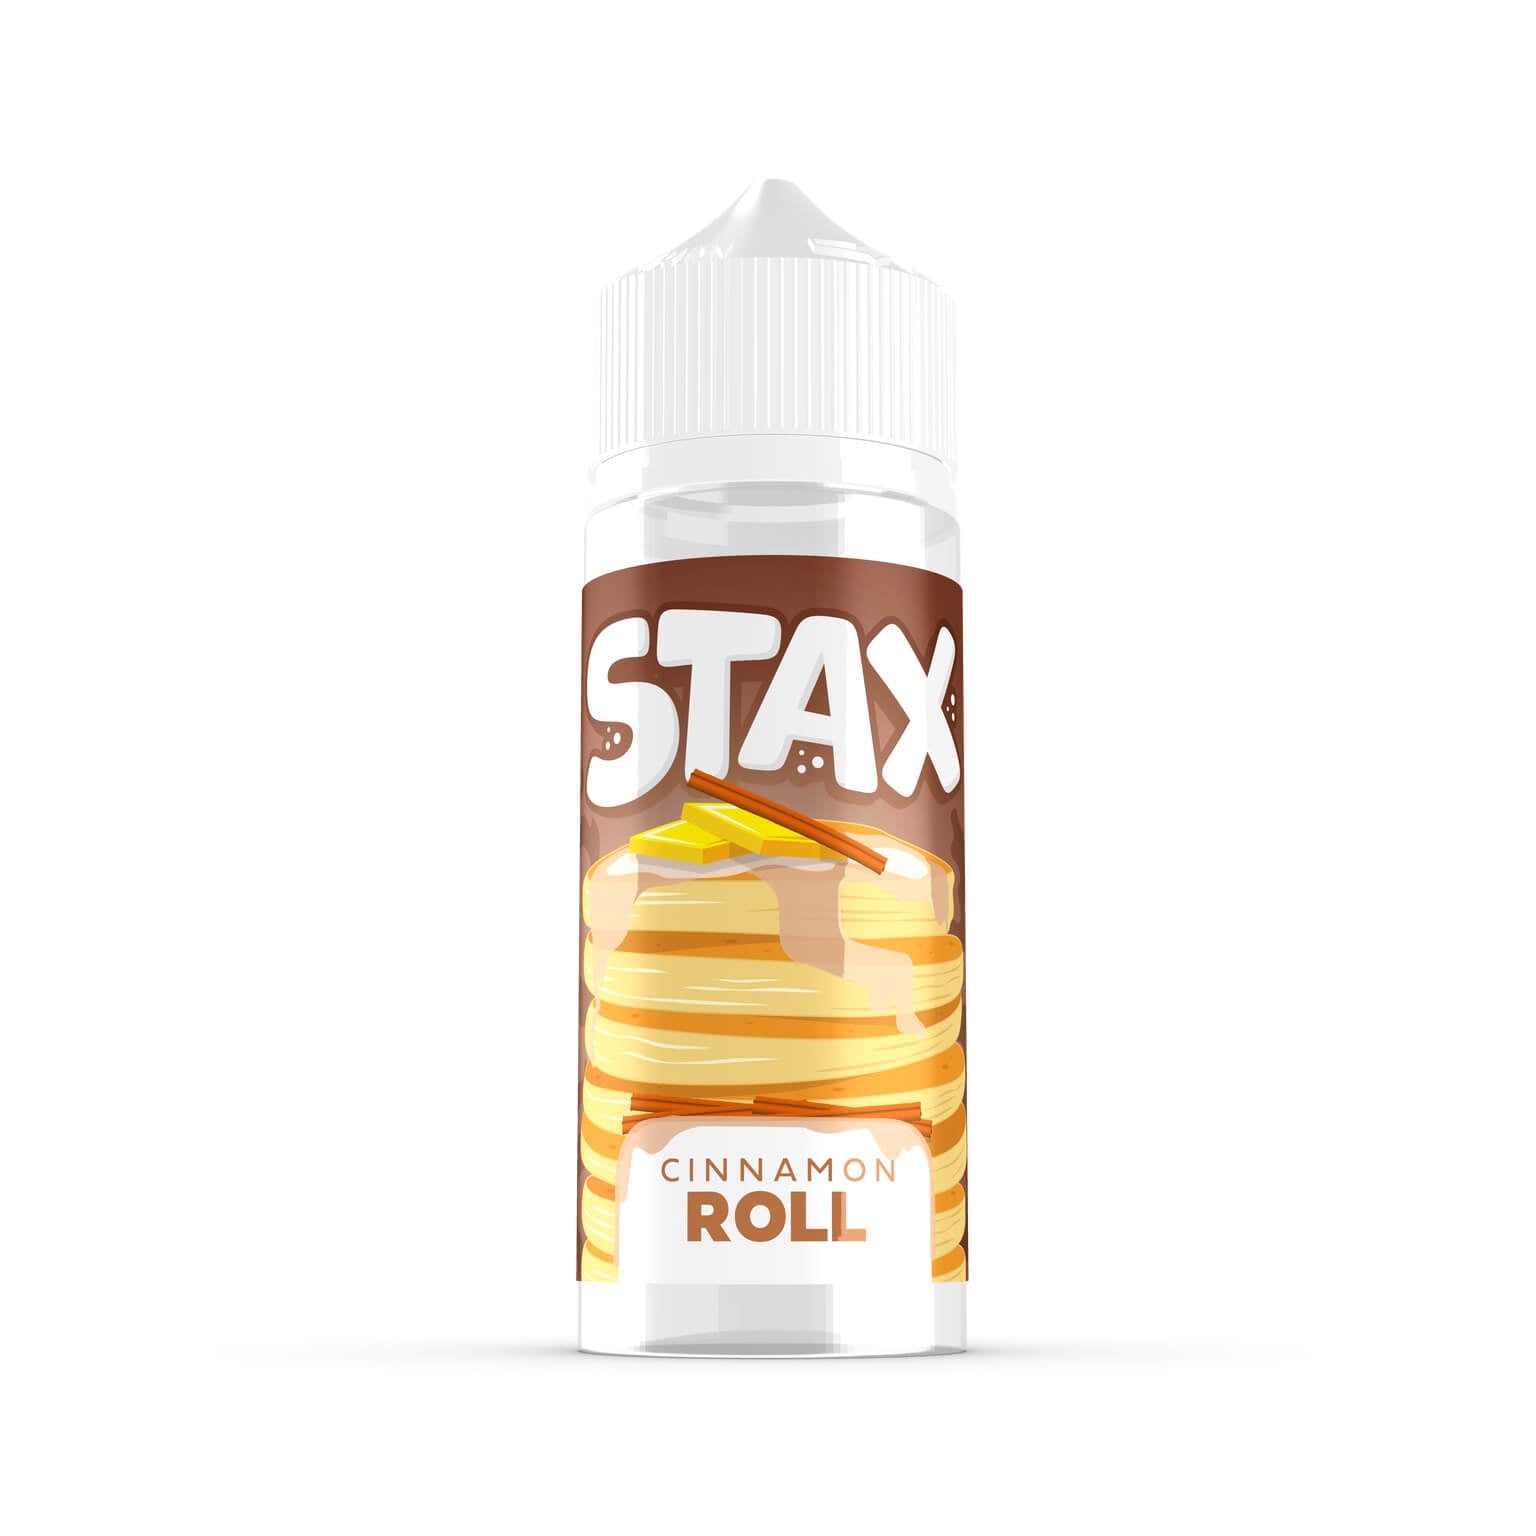 Cinnamon Roll Shortfill by Stax. - 100ml-Supergood.